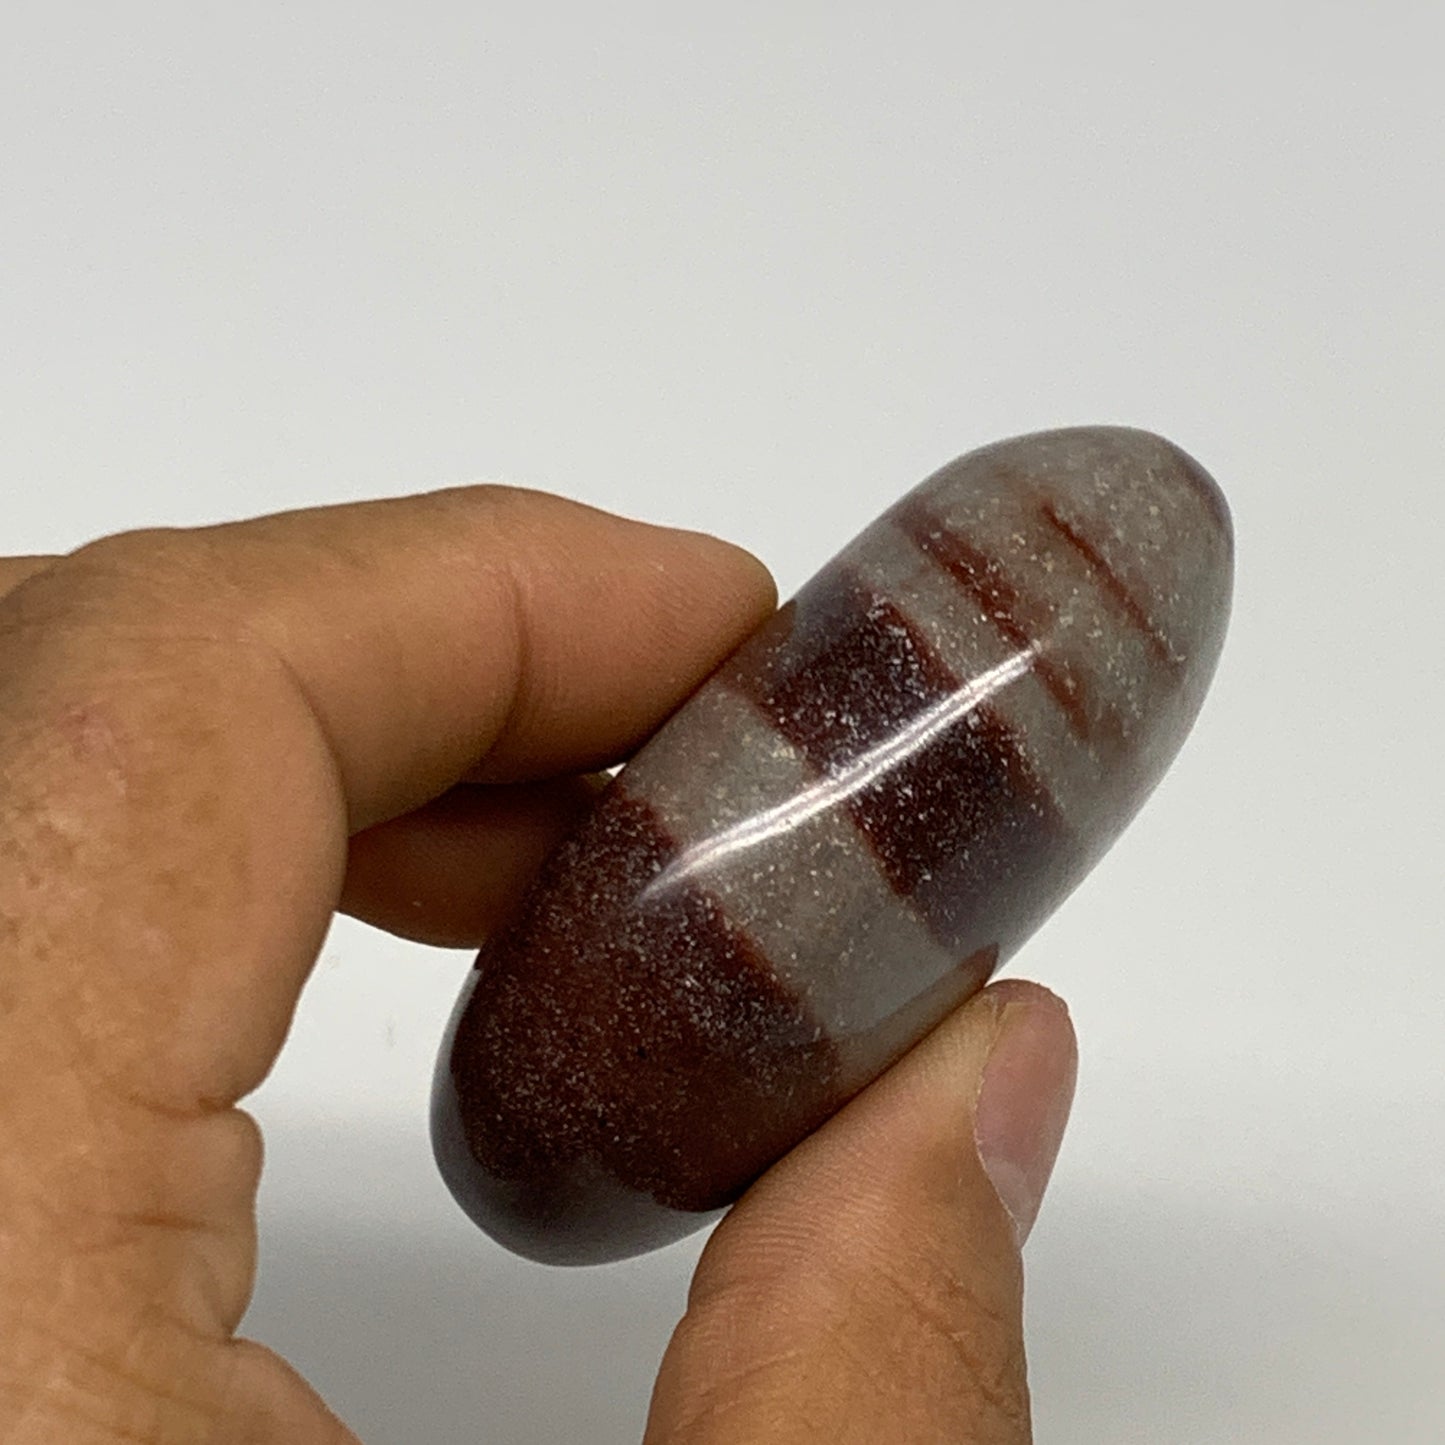 96g, 2.3"x1.8"x0.9", Narmada Shiva Lingam Palm-Stone Polished, B29361